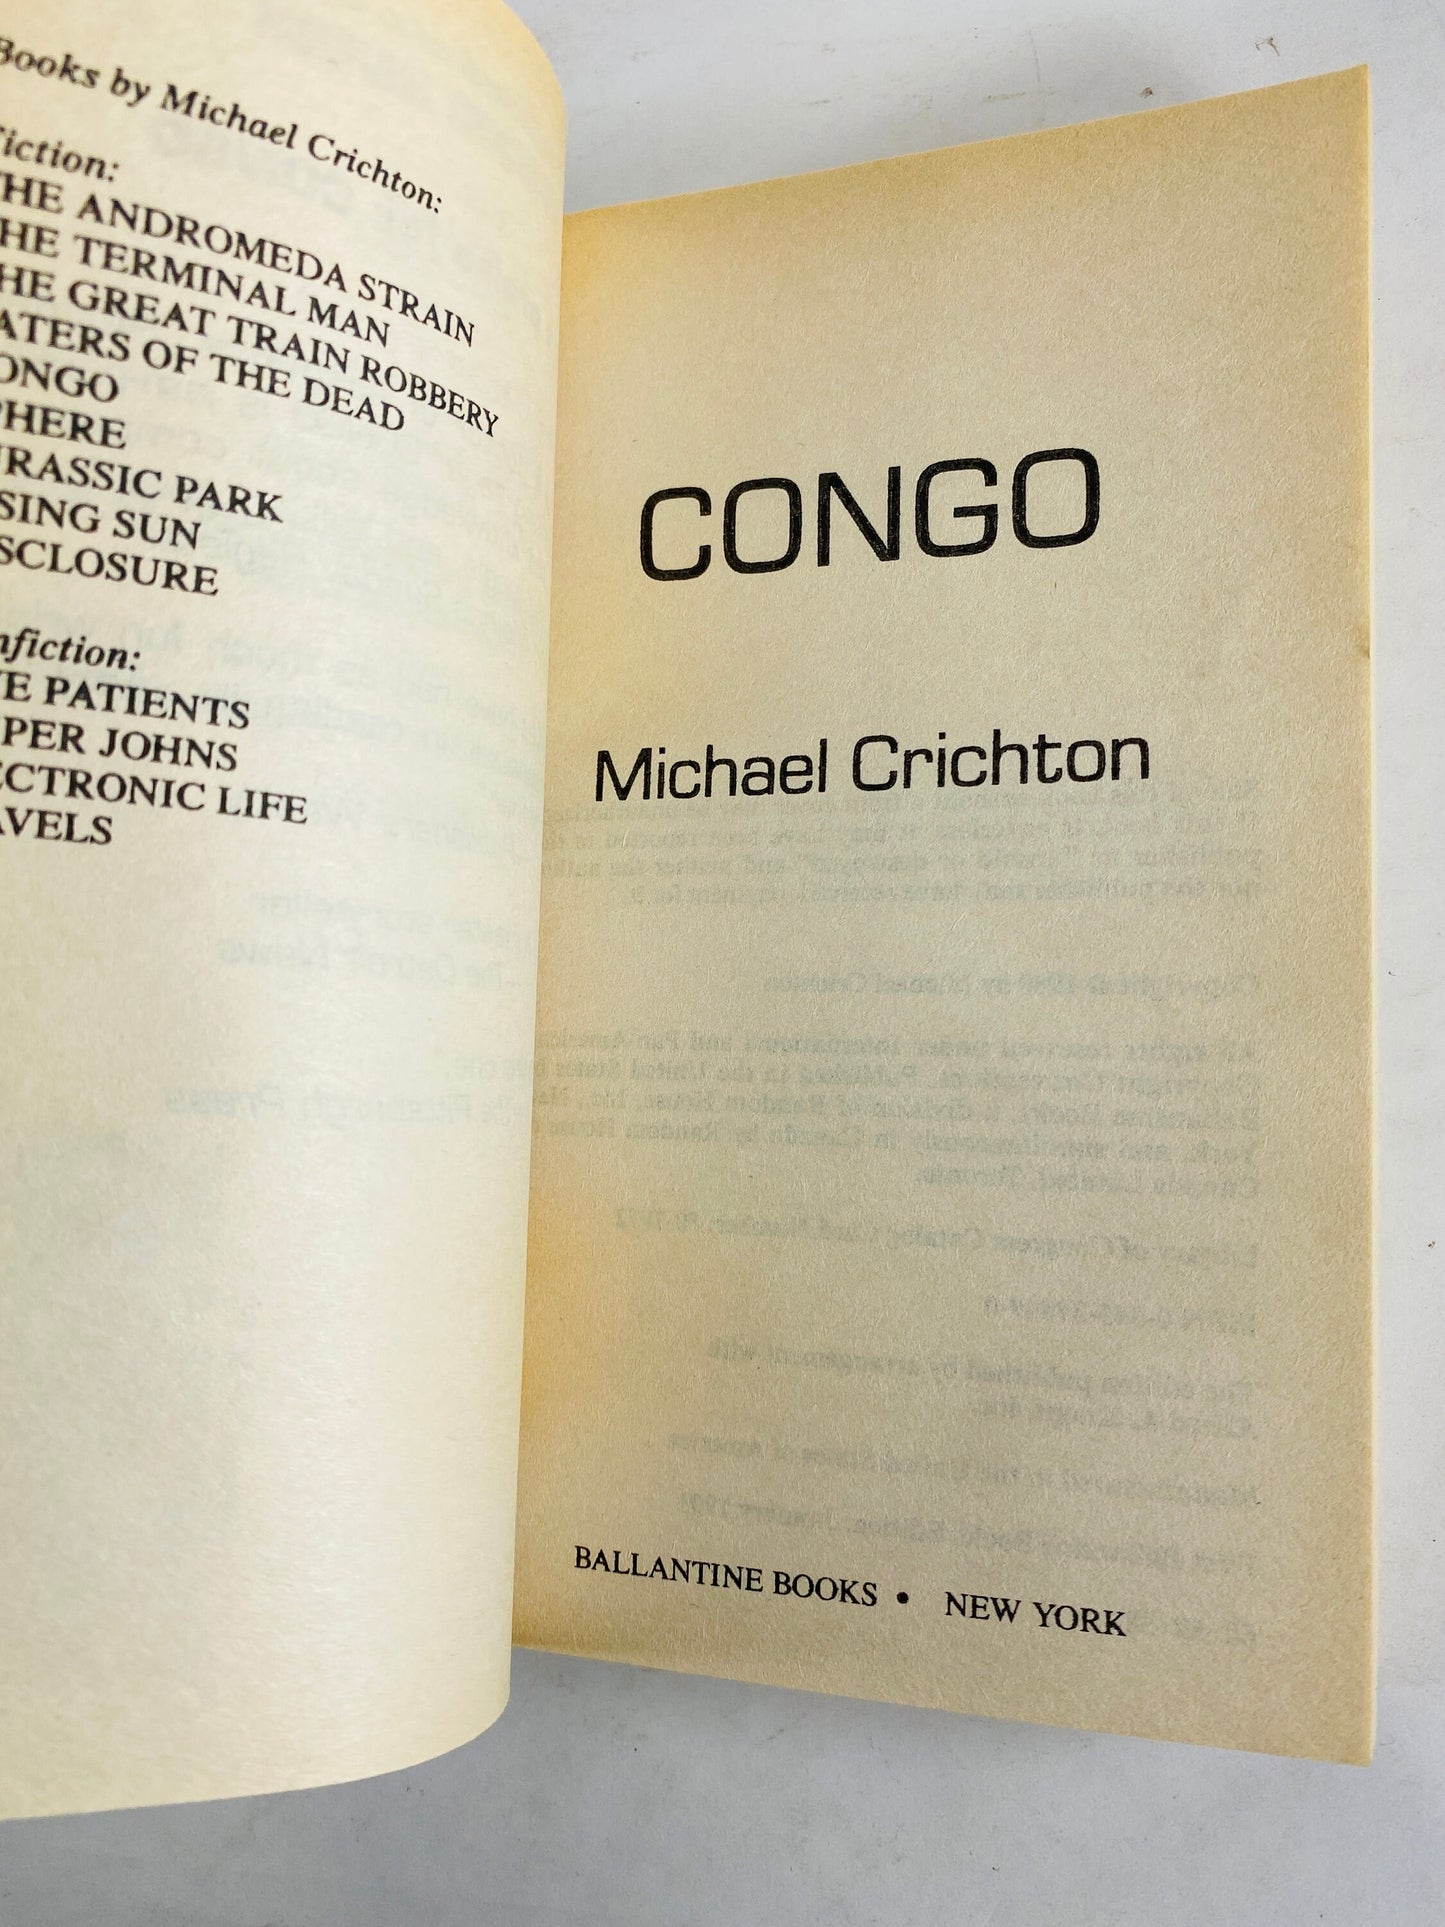 Congo by Michael Crichton EARLY PRINTING vintage paperback book circa 1993